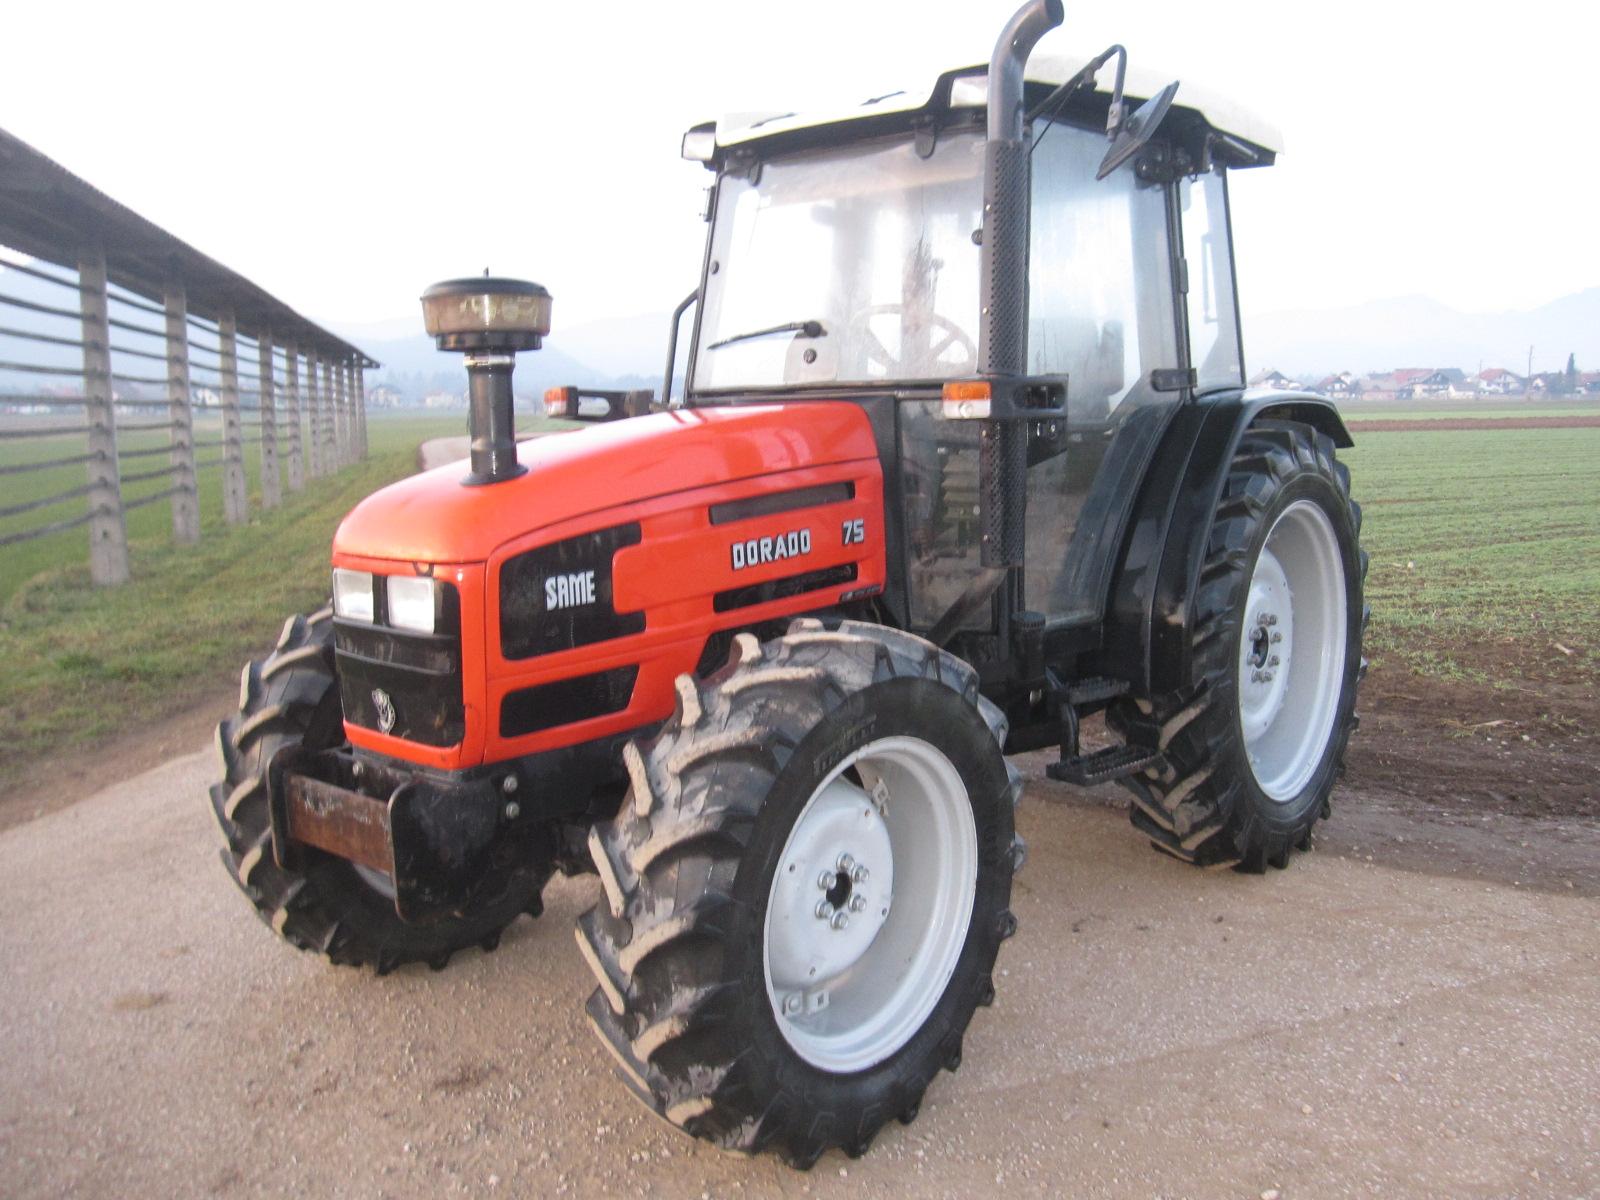 Landtechnik-Börse: Gebrauchter Traktor Same Dorado 75 DT